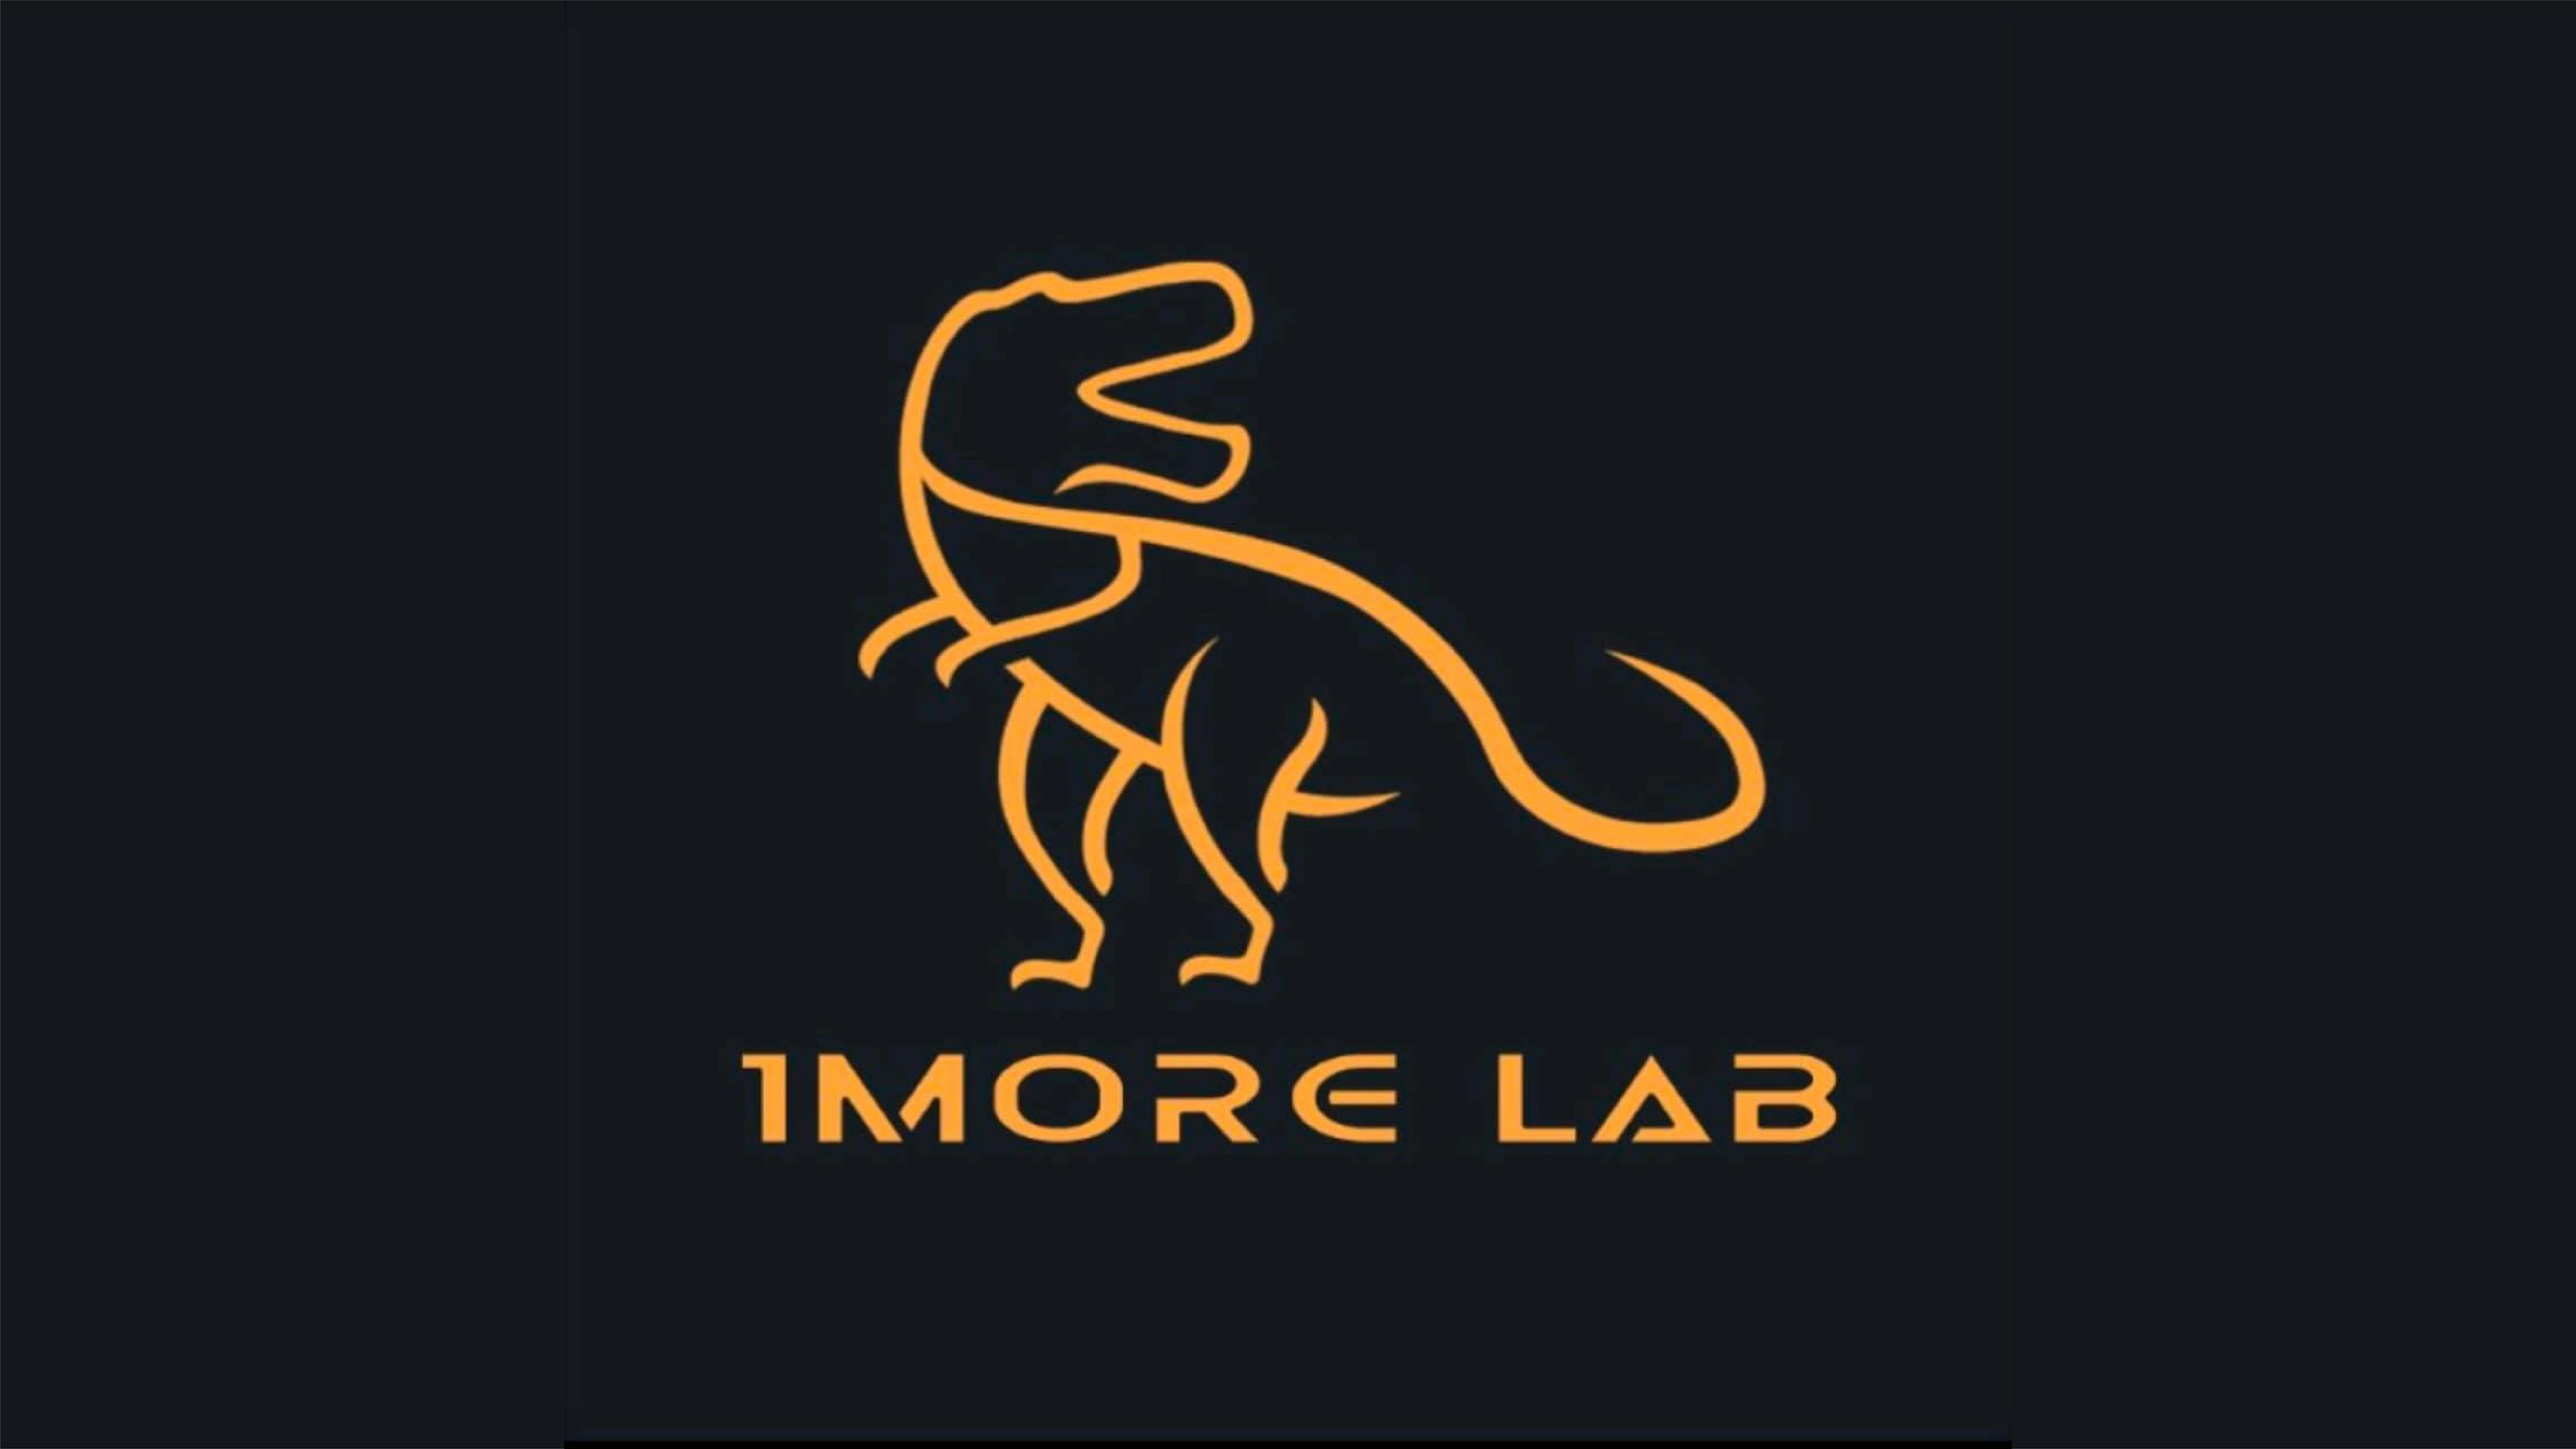 1More Lab